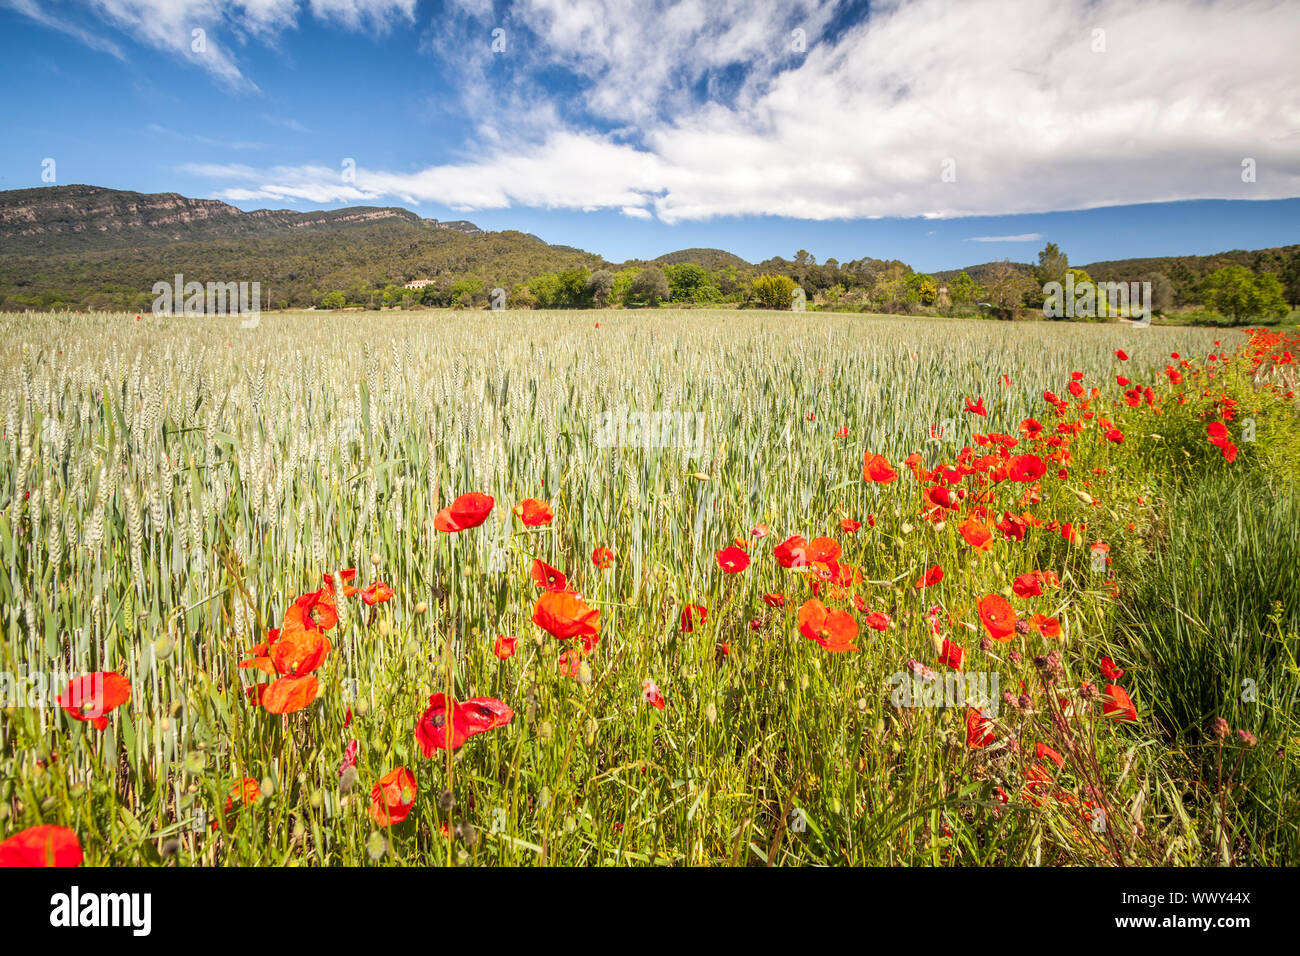 Crops near Canet d'Adri village, Girona, Spain Stock Photo